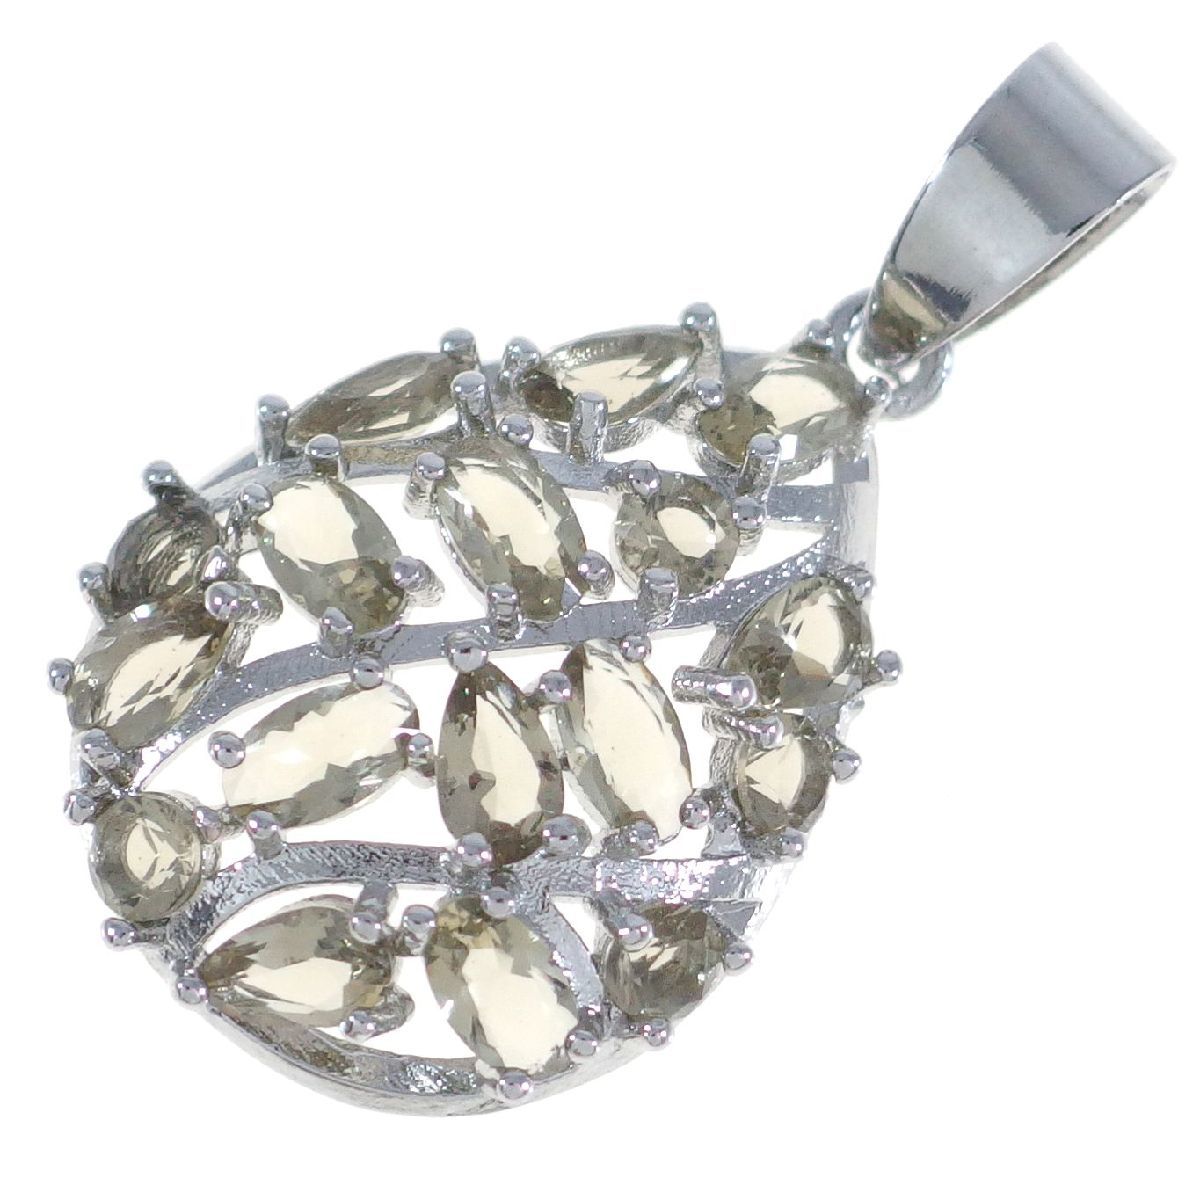 A8744*[925]* gray series smoky topaz color Stone * silver Phil do* new goods pendant * necklace .*